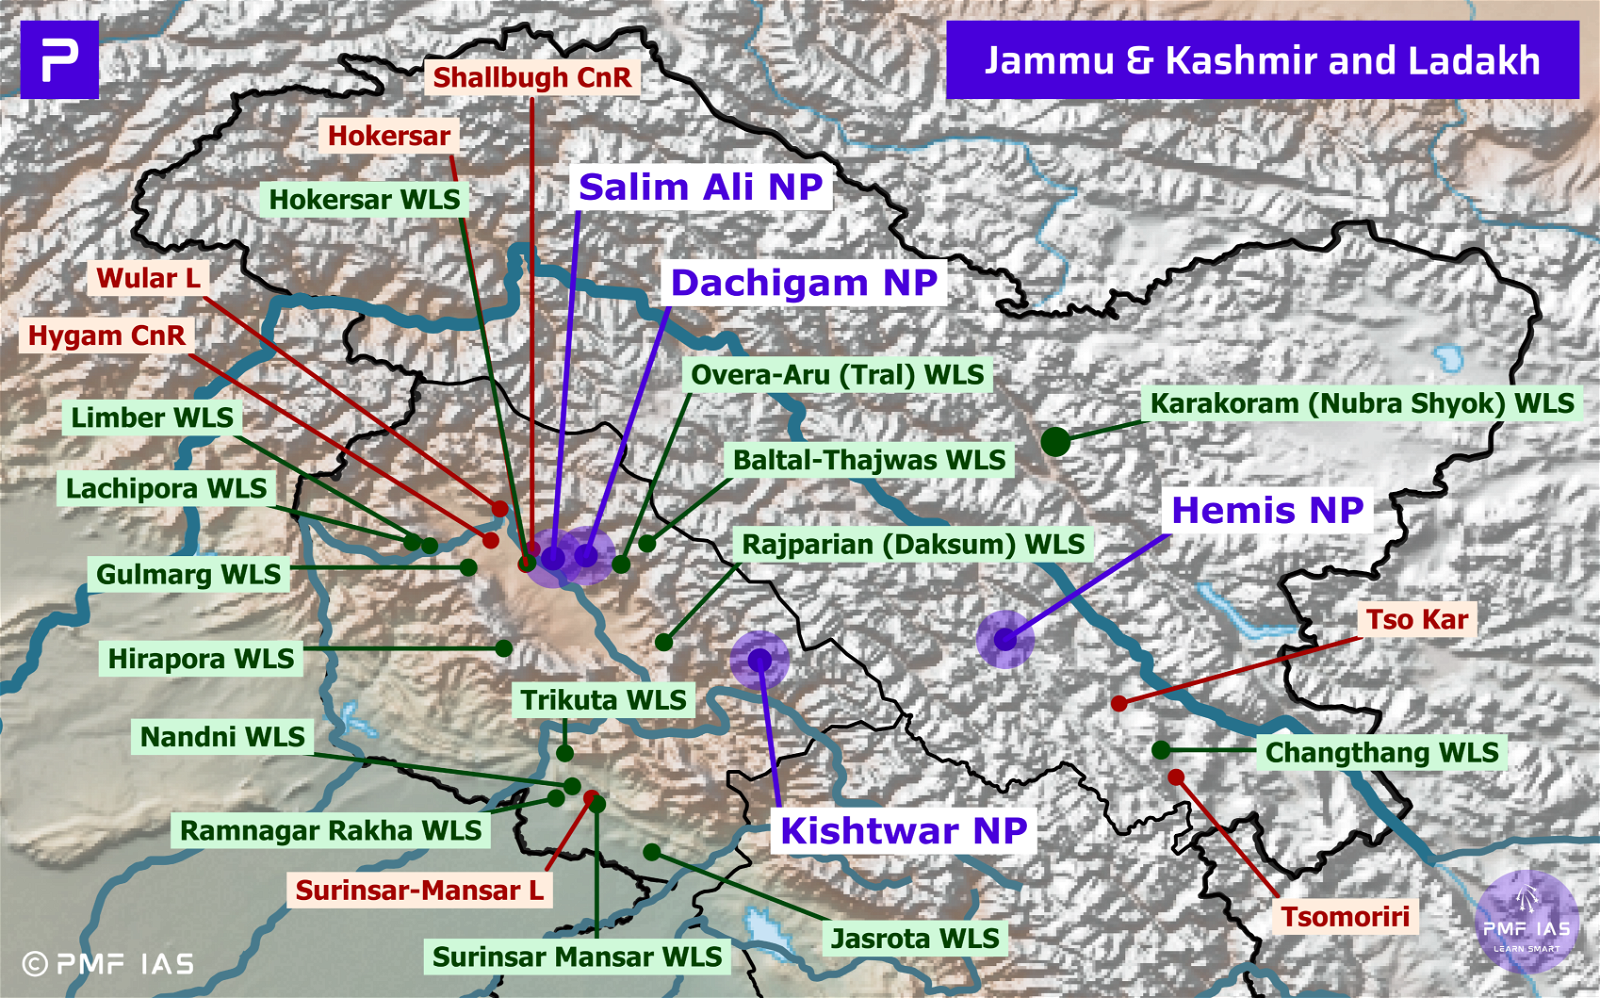 National Parks Tiger Reserves Wildlife Sanctuaries of Jammu & Kashmir Ladakh